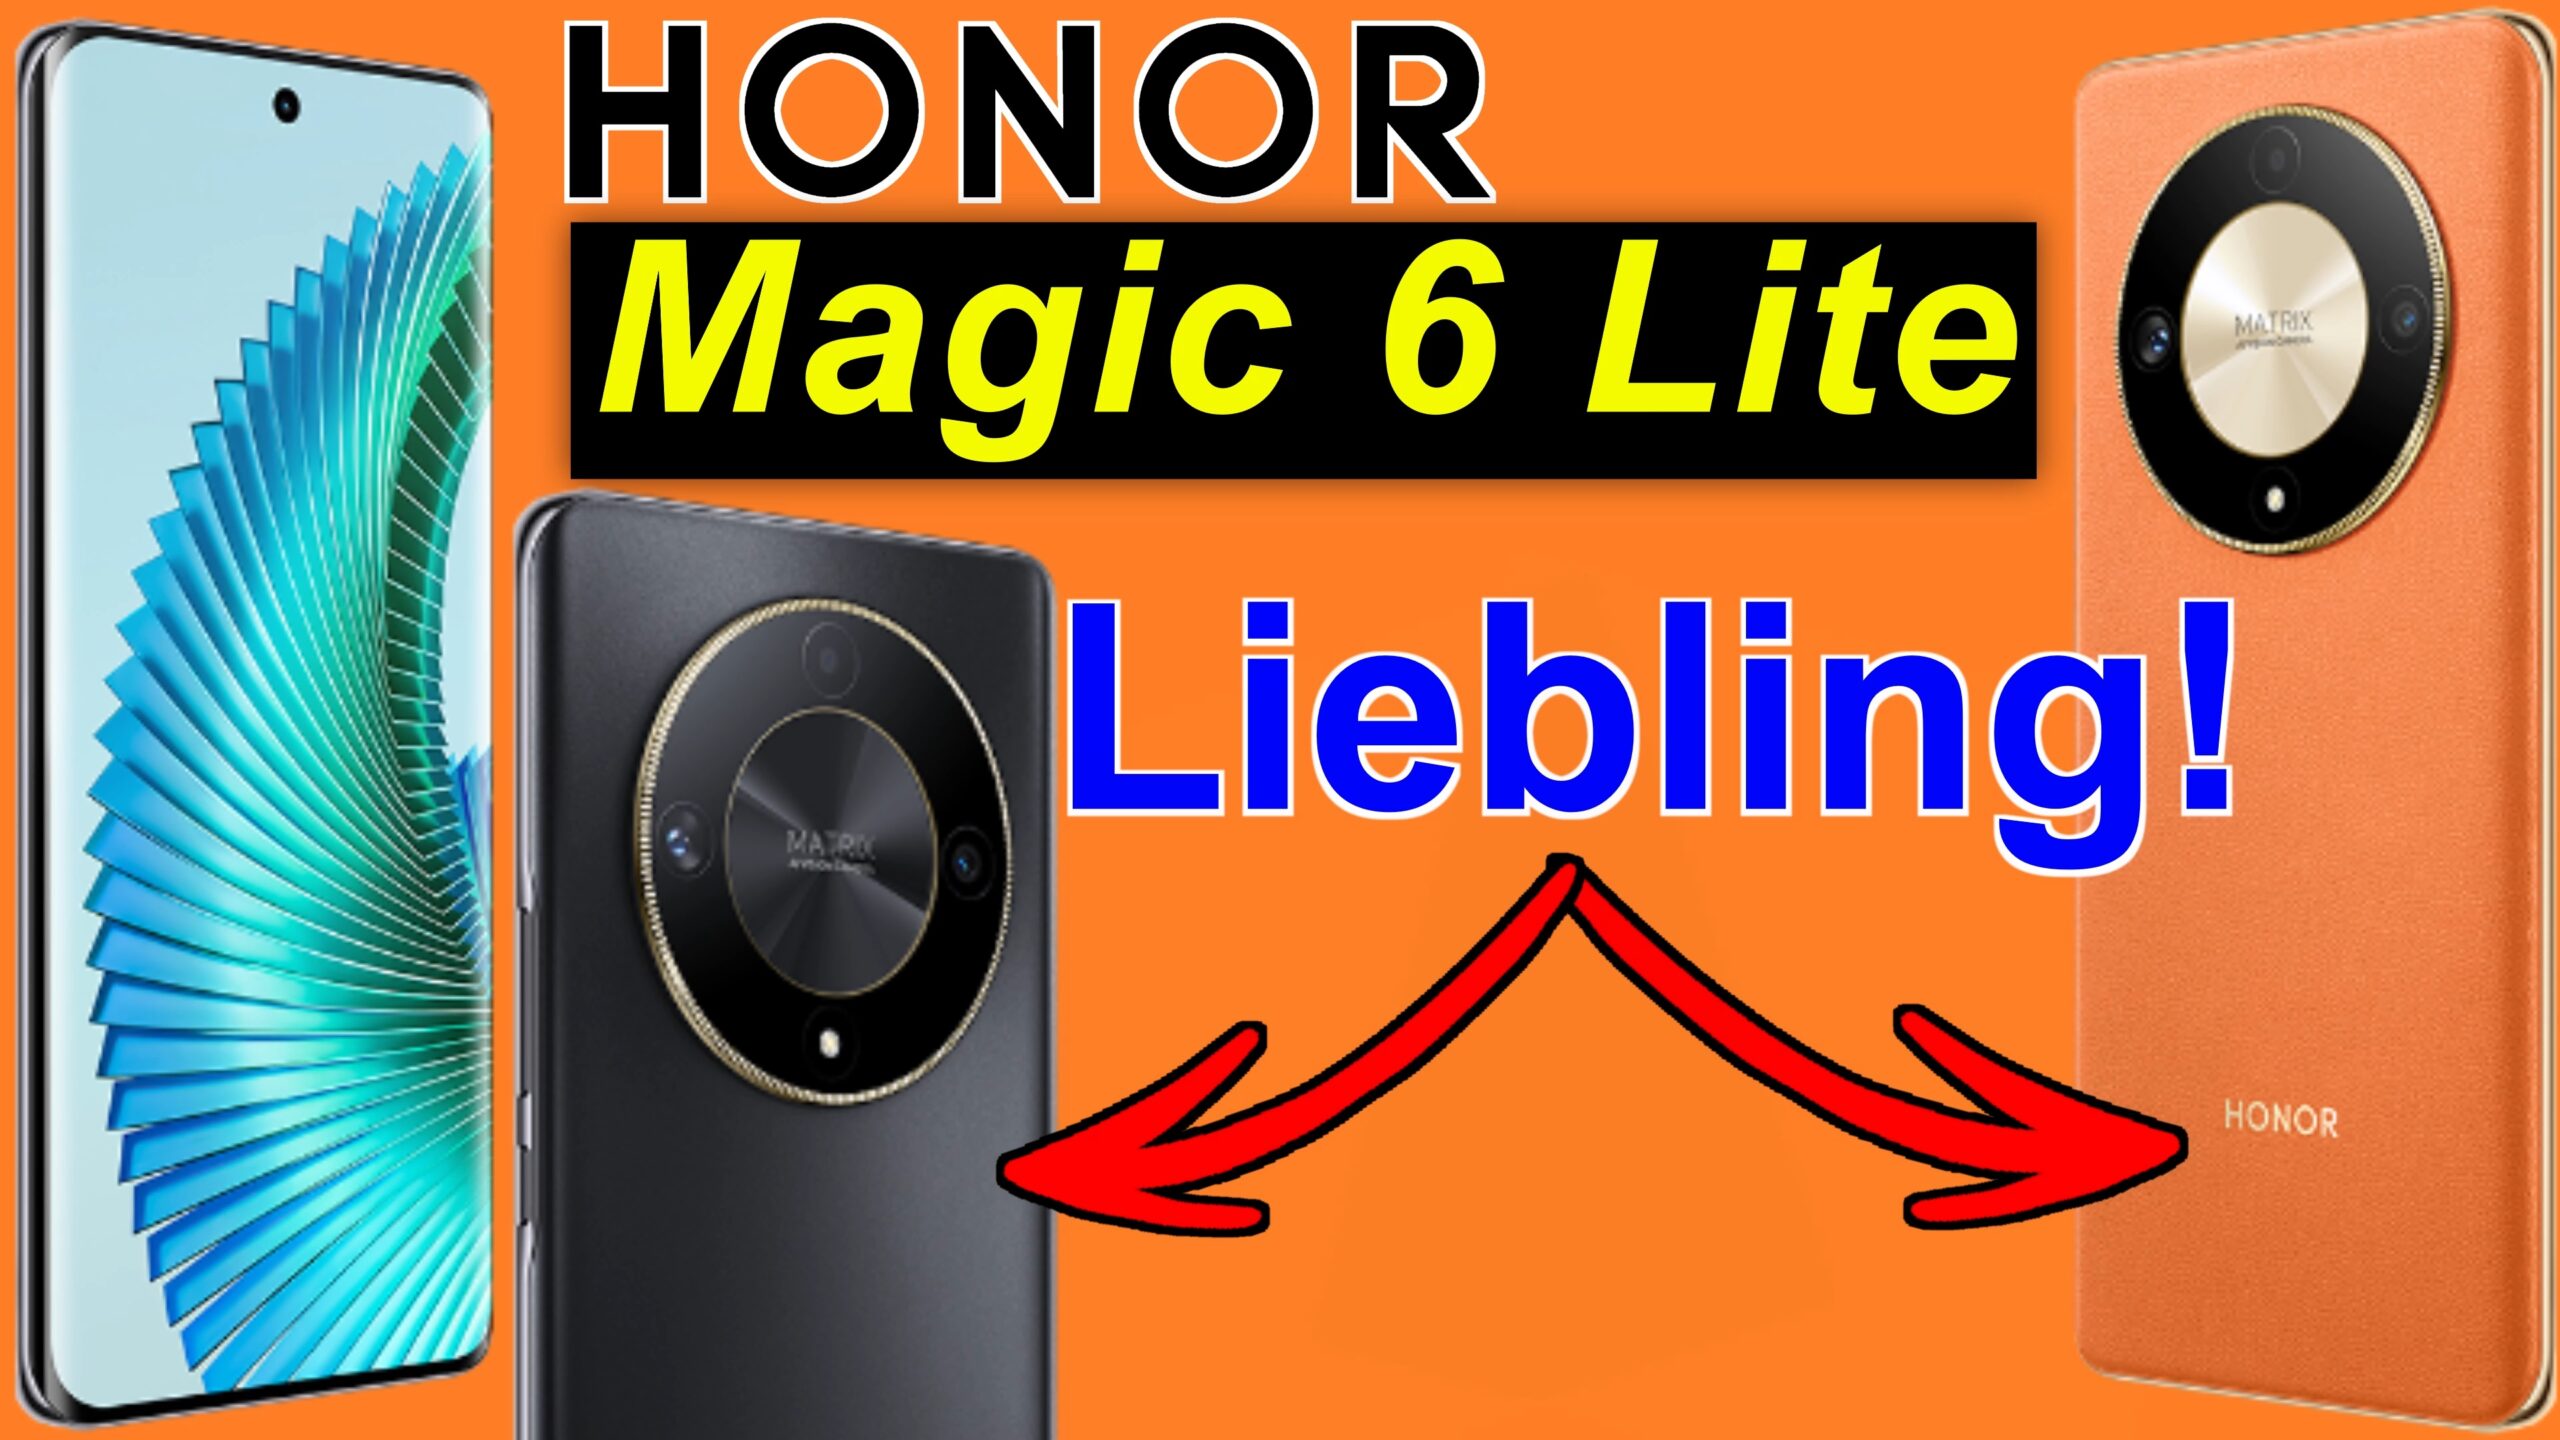 Honor Magic 6 Lite - Champion seiner Klasse